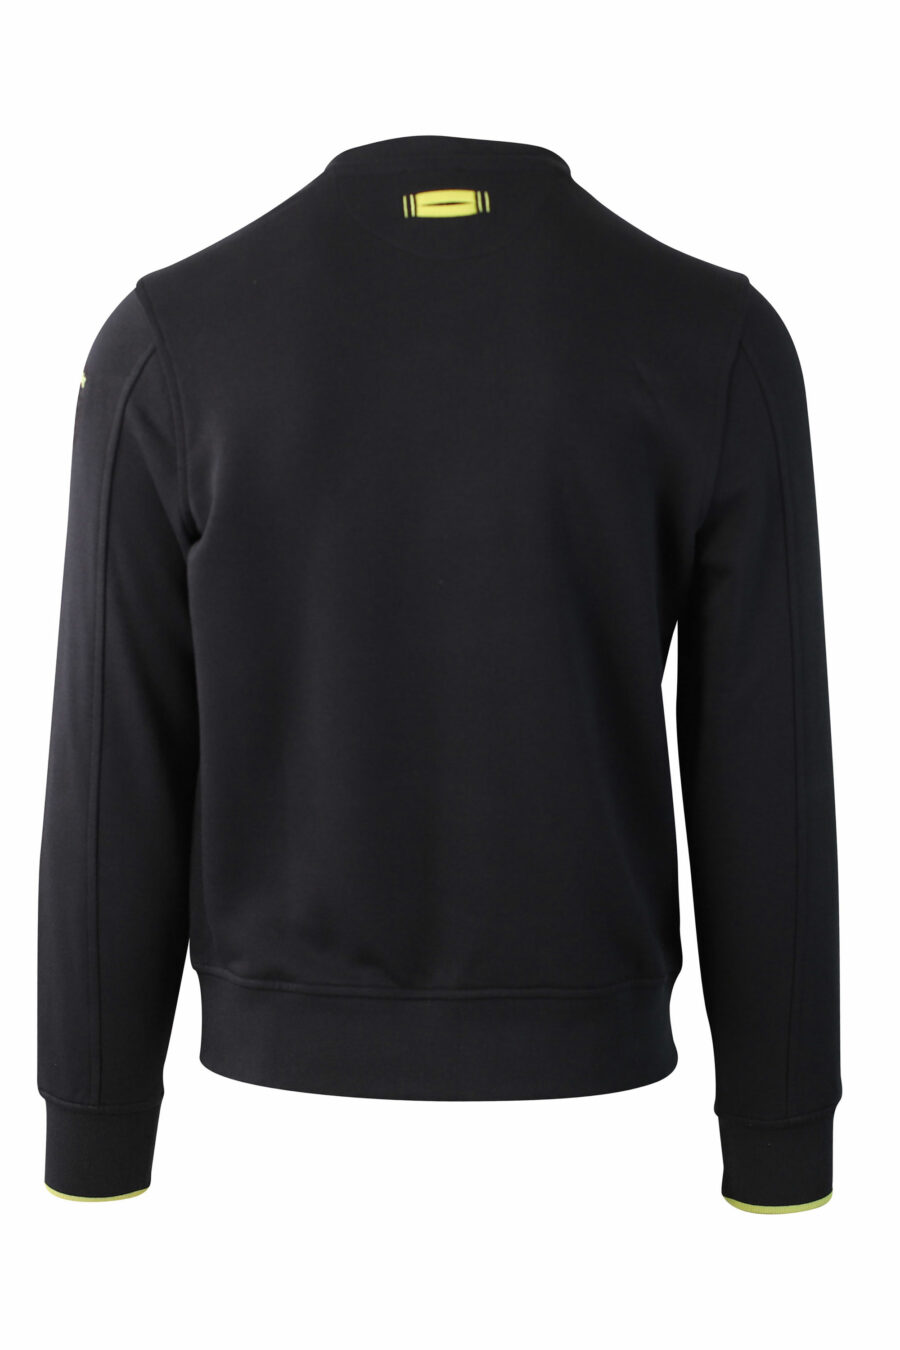 Black sweatshirt with monochrome velvet maxilogue - IMG 0032 1